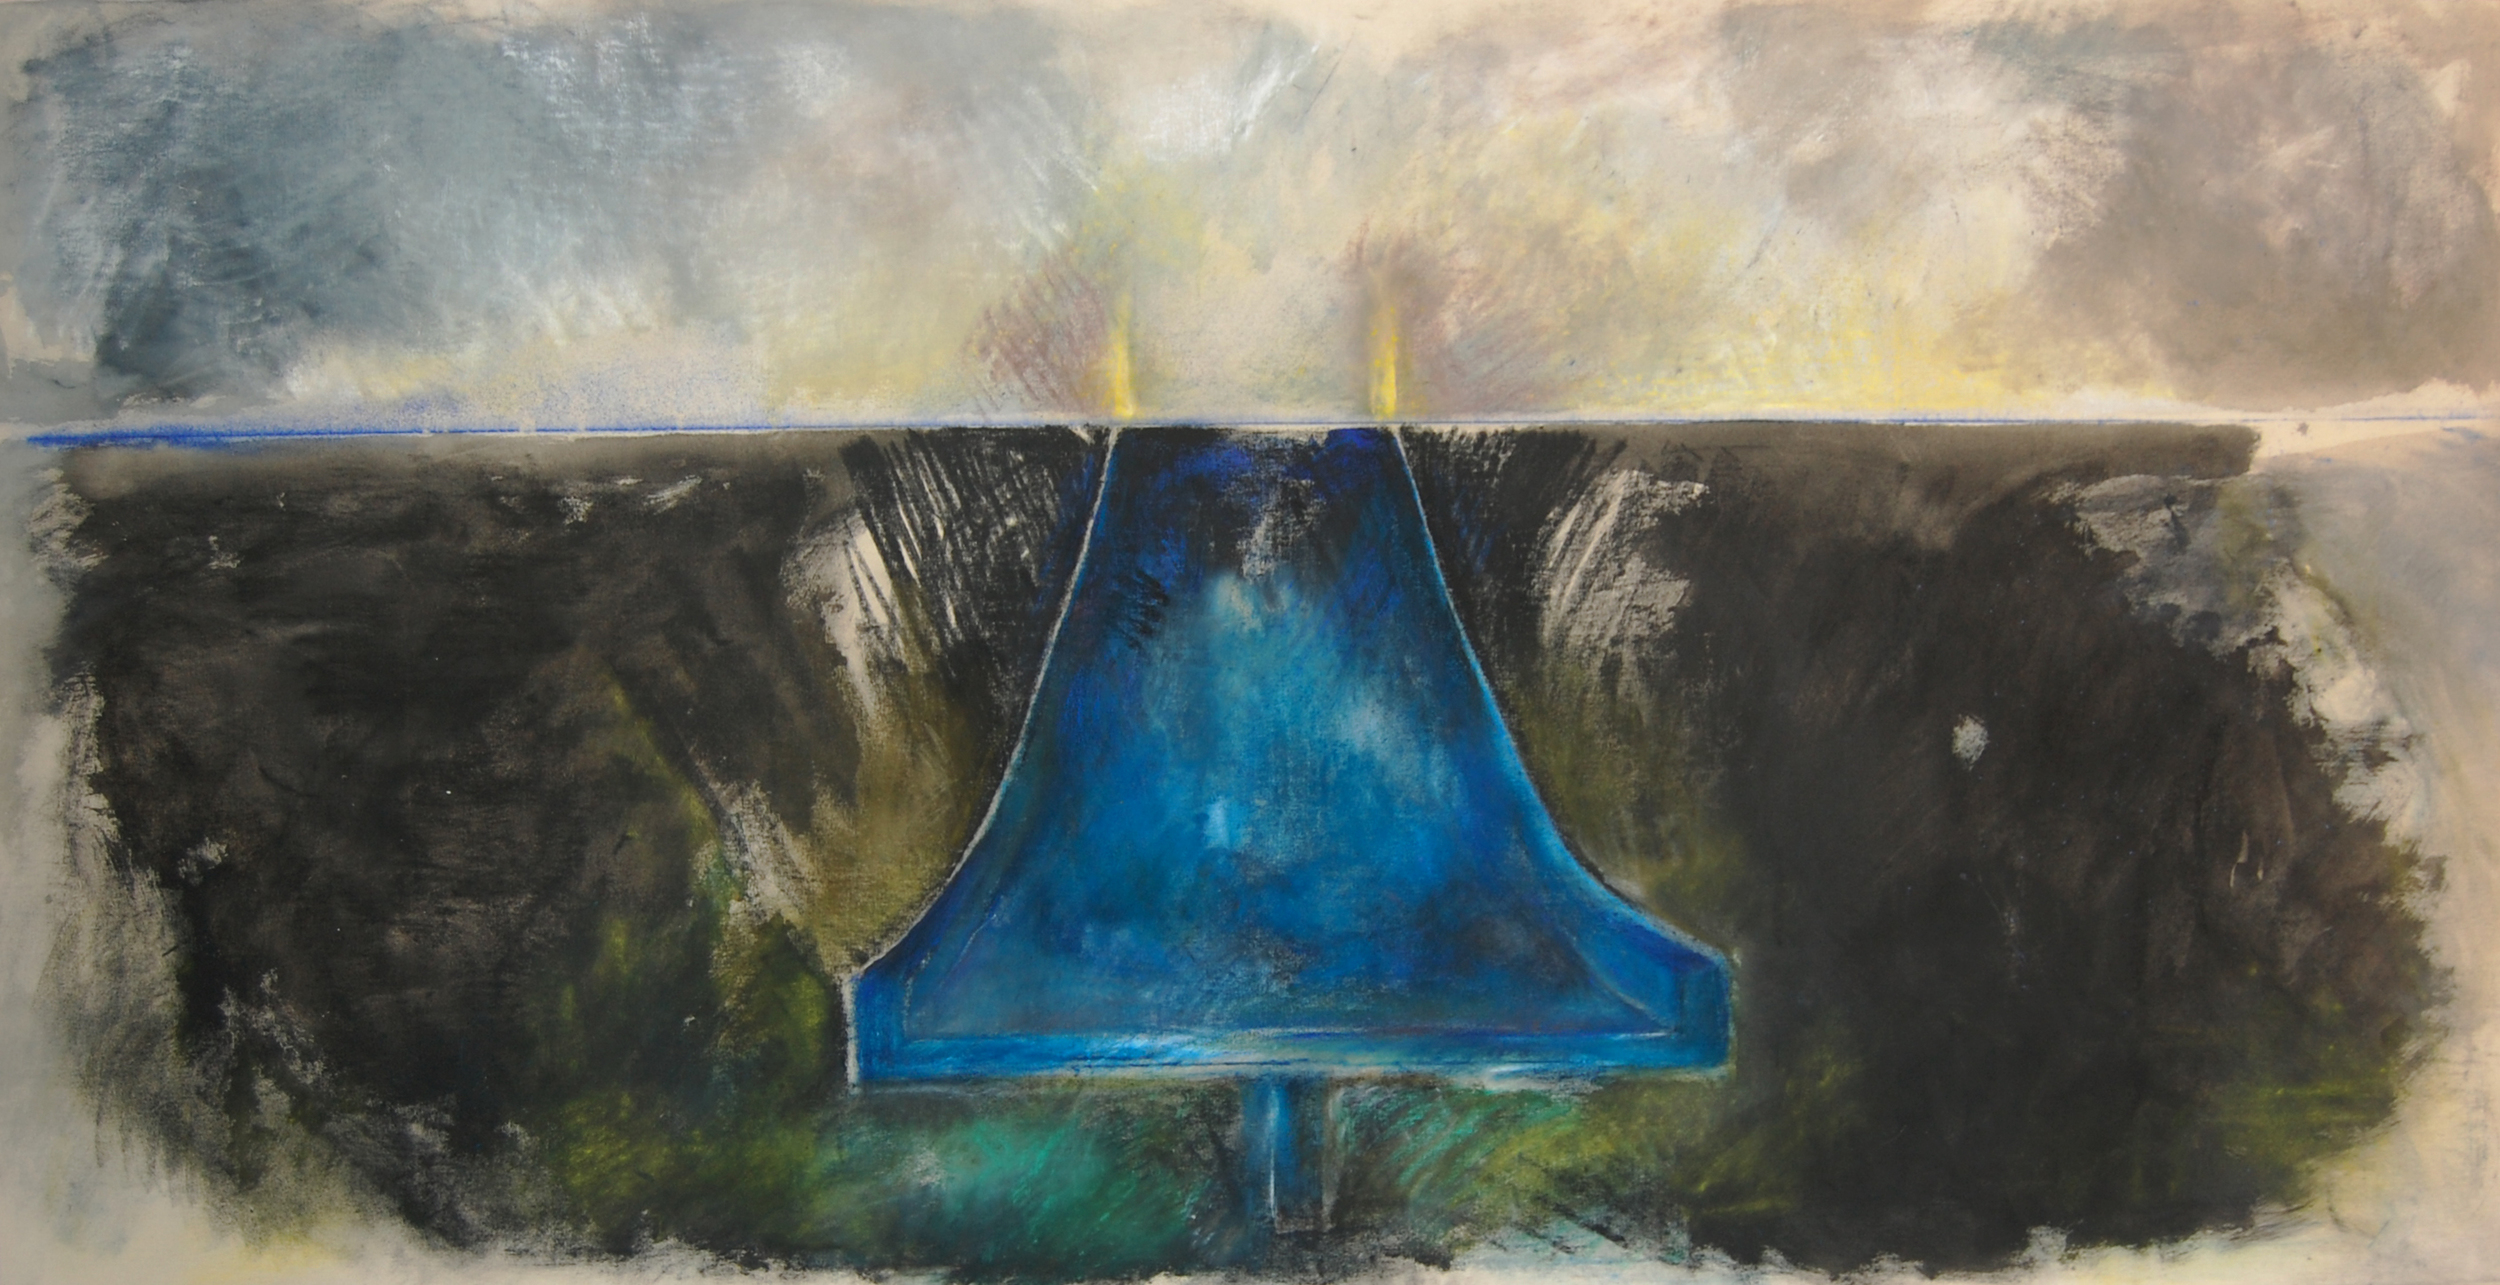  Deep Blue Slide, 4'x8', Pastel on canvas 